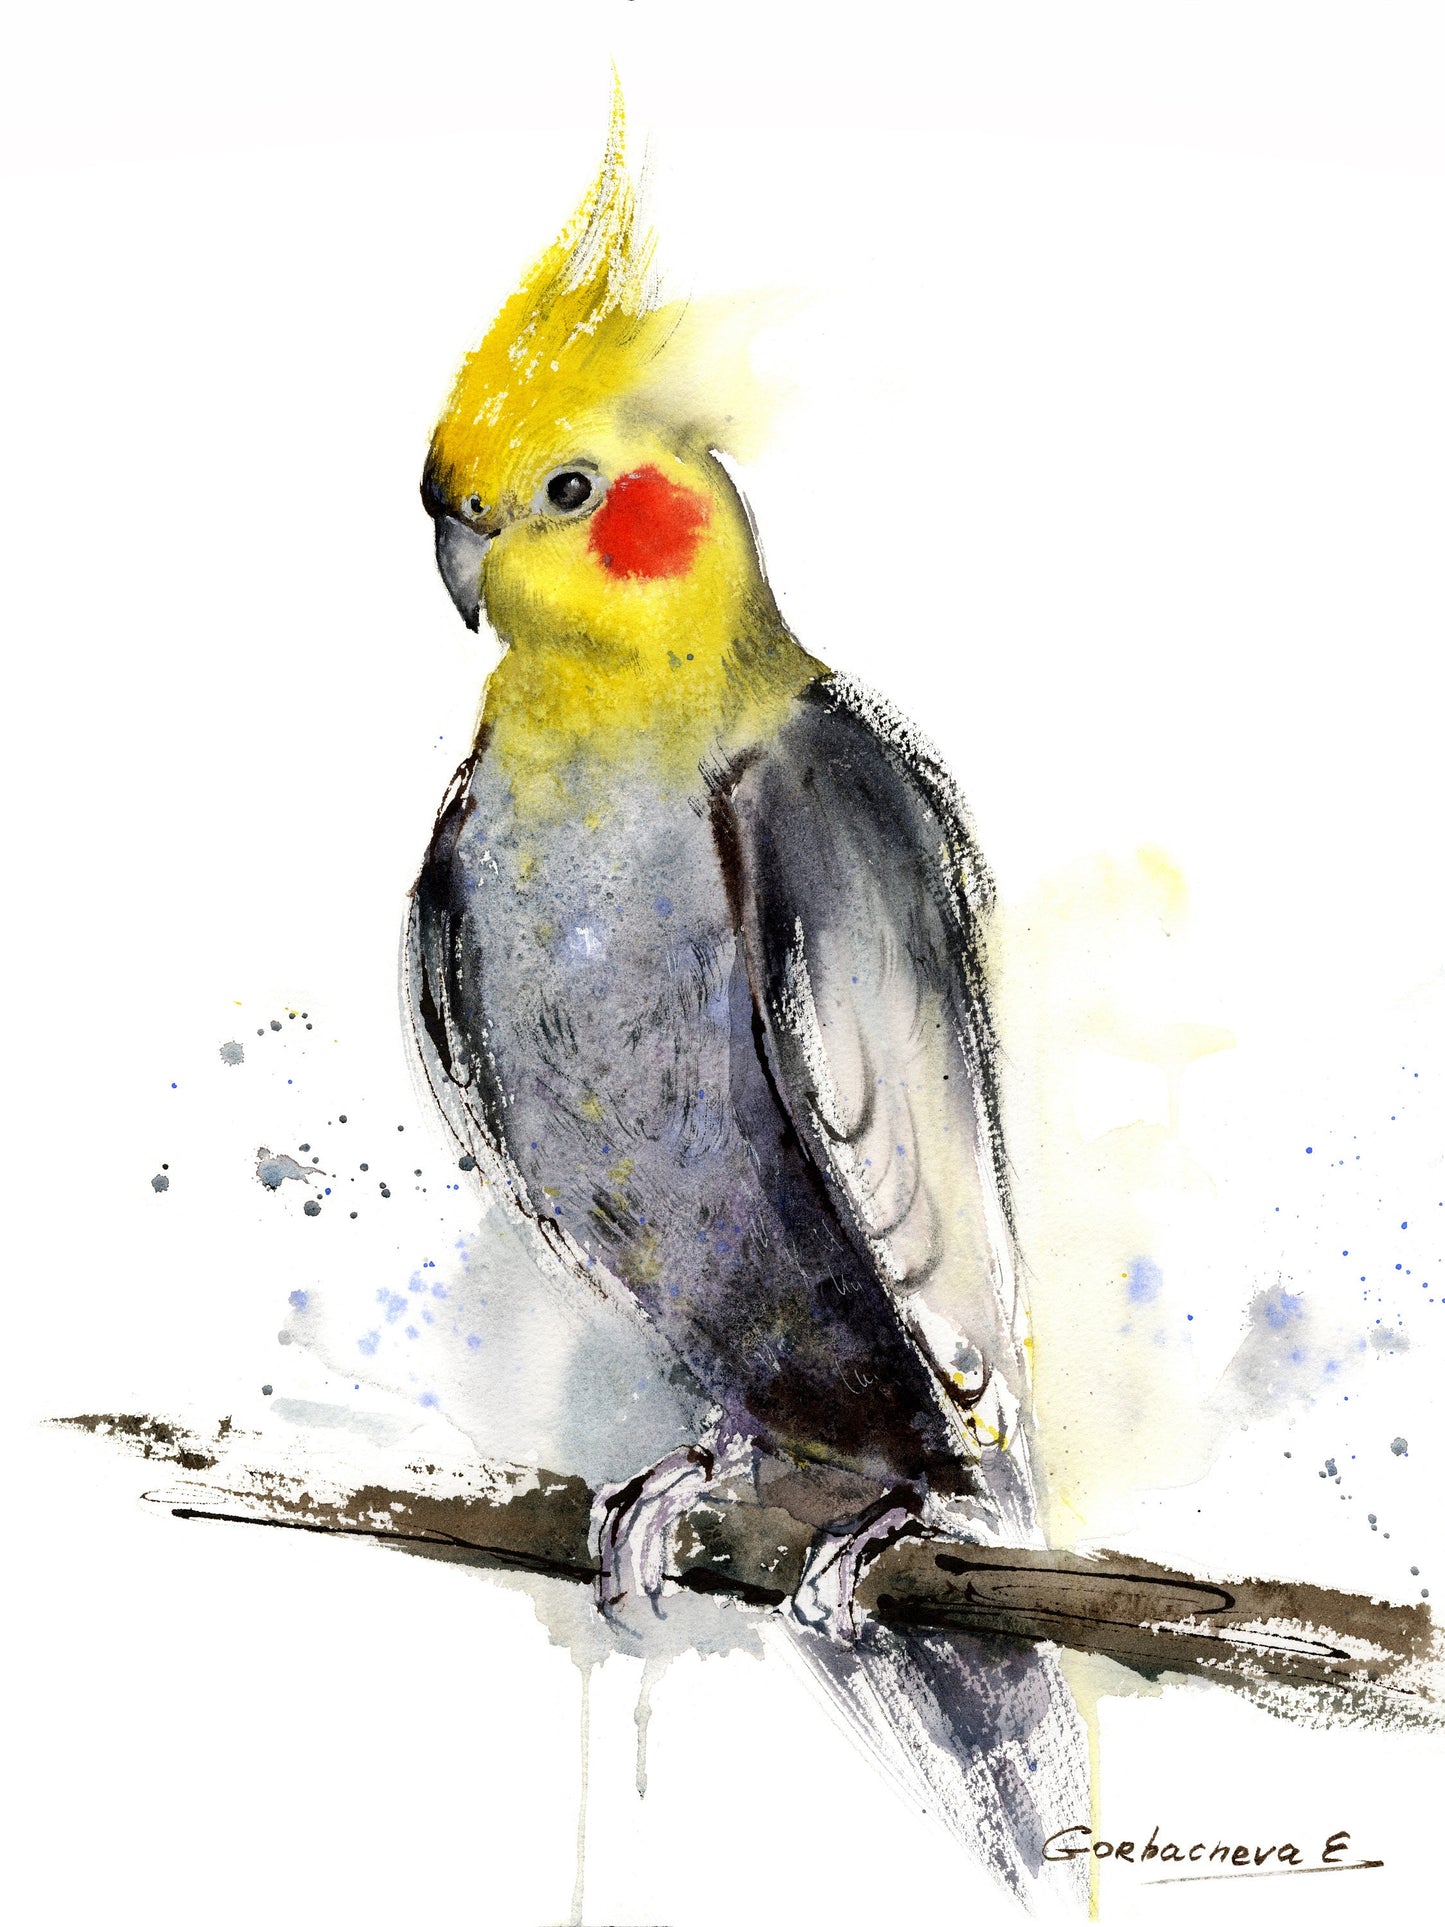 Watercolor Bird Set of 2, Art, Minimalist Art Prints, Tropical Birds Wall Art, Yellow Gray Cockatiel Decor